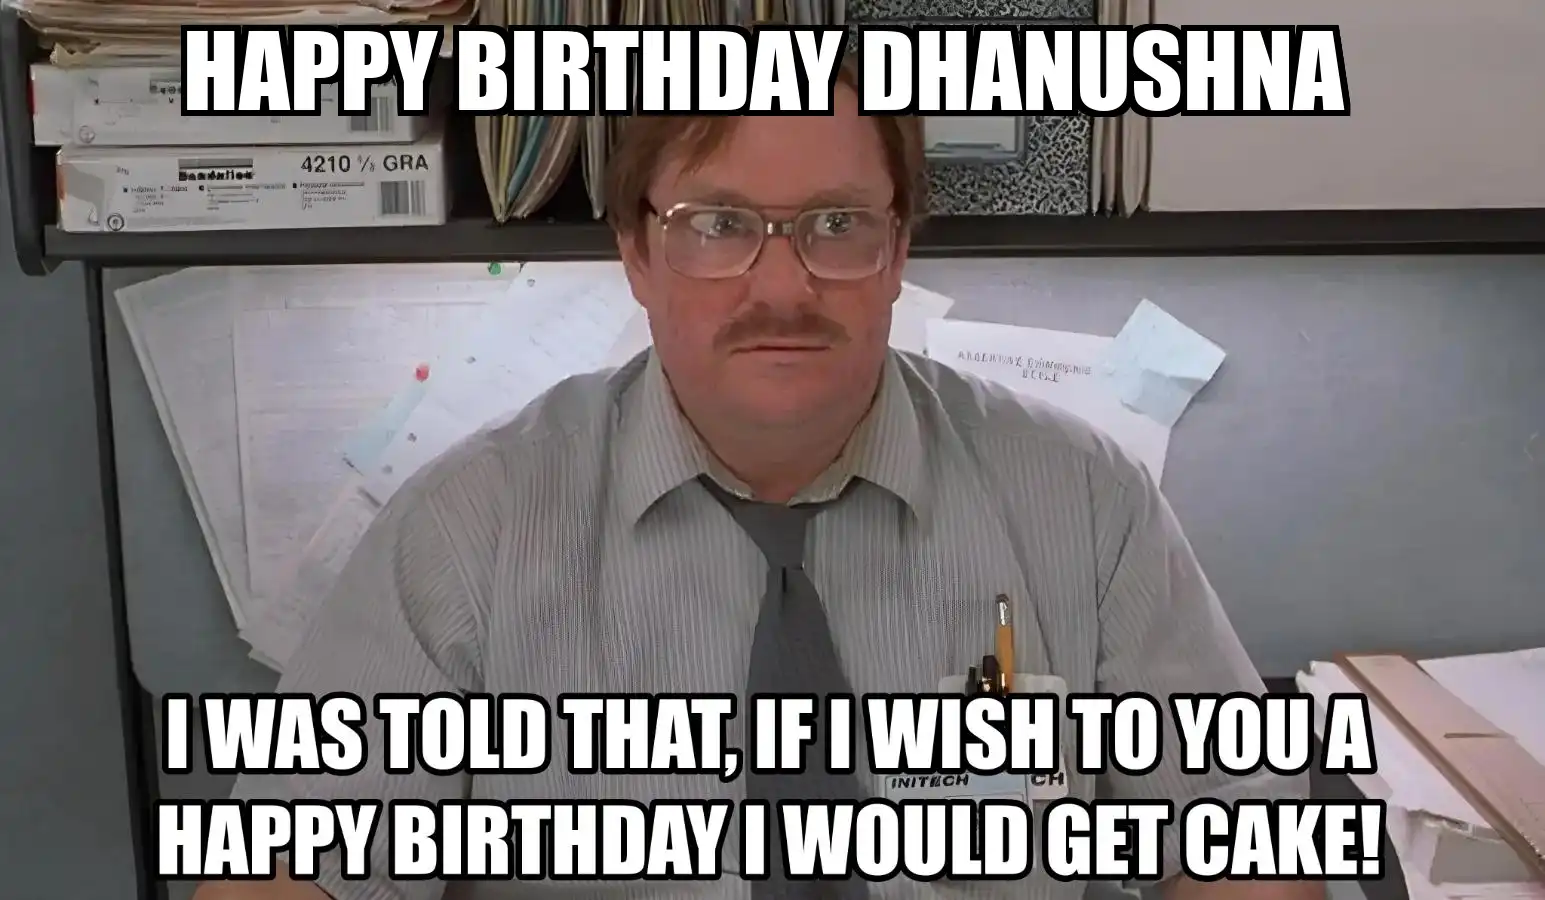 Happy Birthday Dhanushna I Would Get A Cake Meme